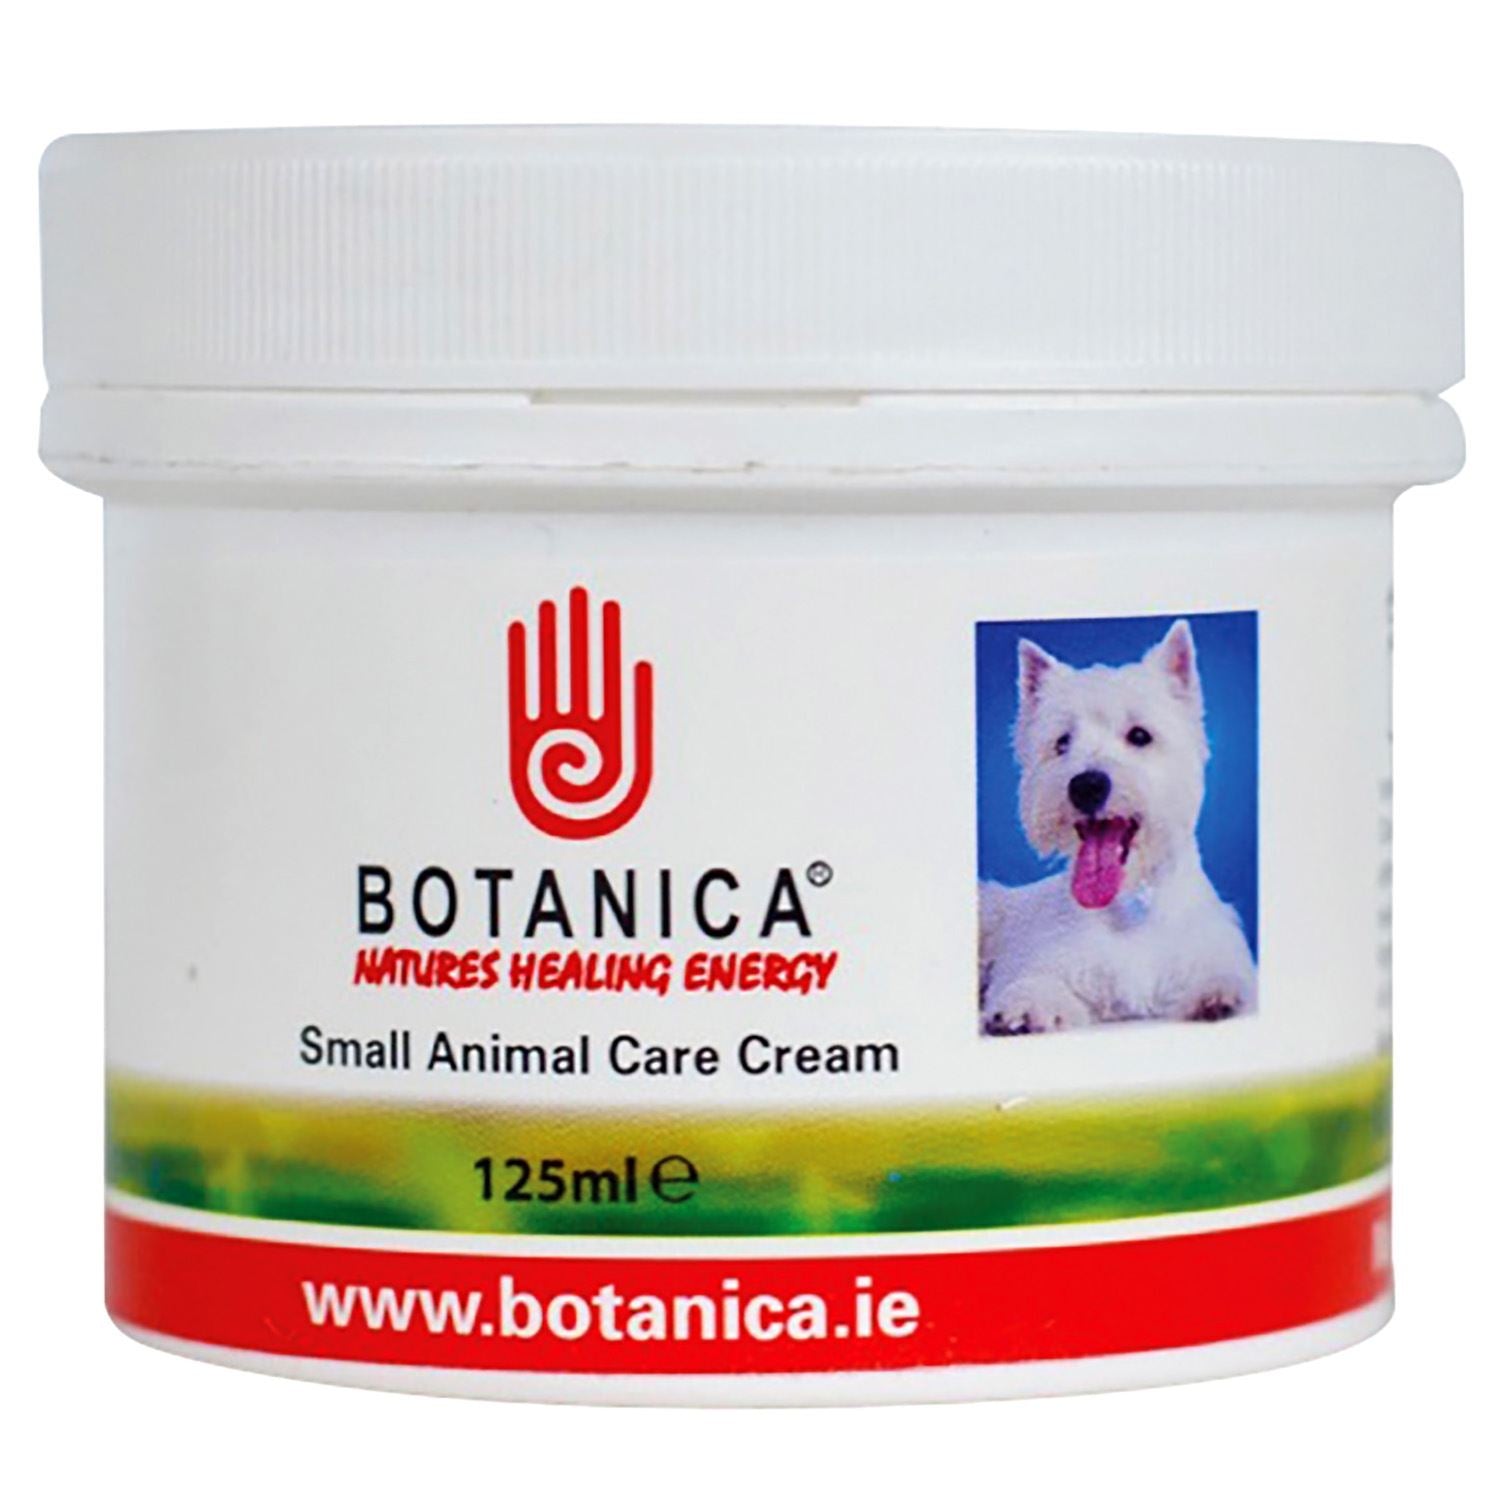 Boica Small Animal Care Cream - Just Horse Riders